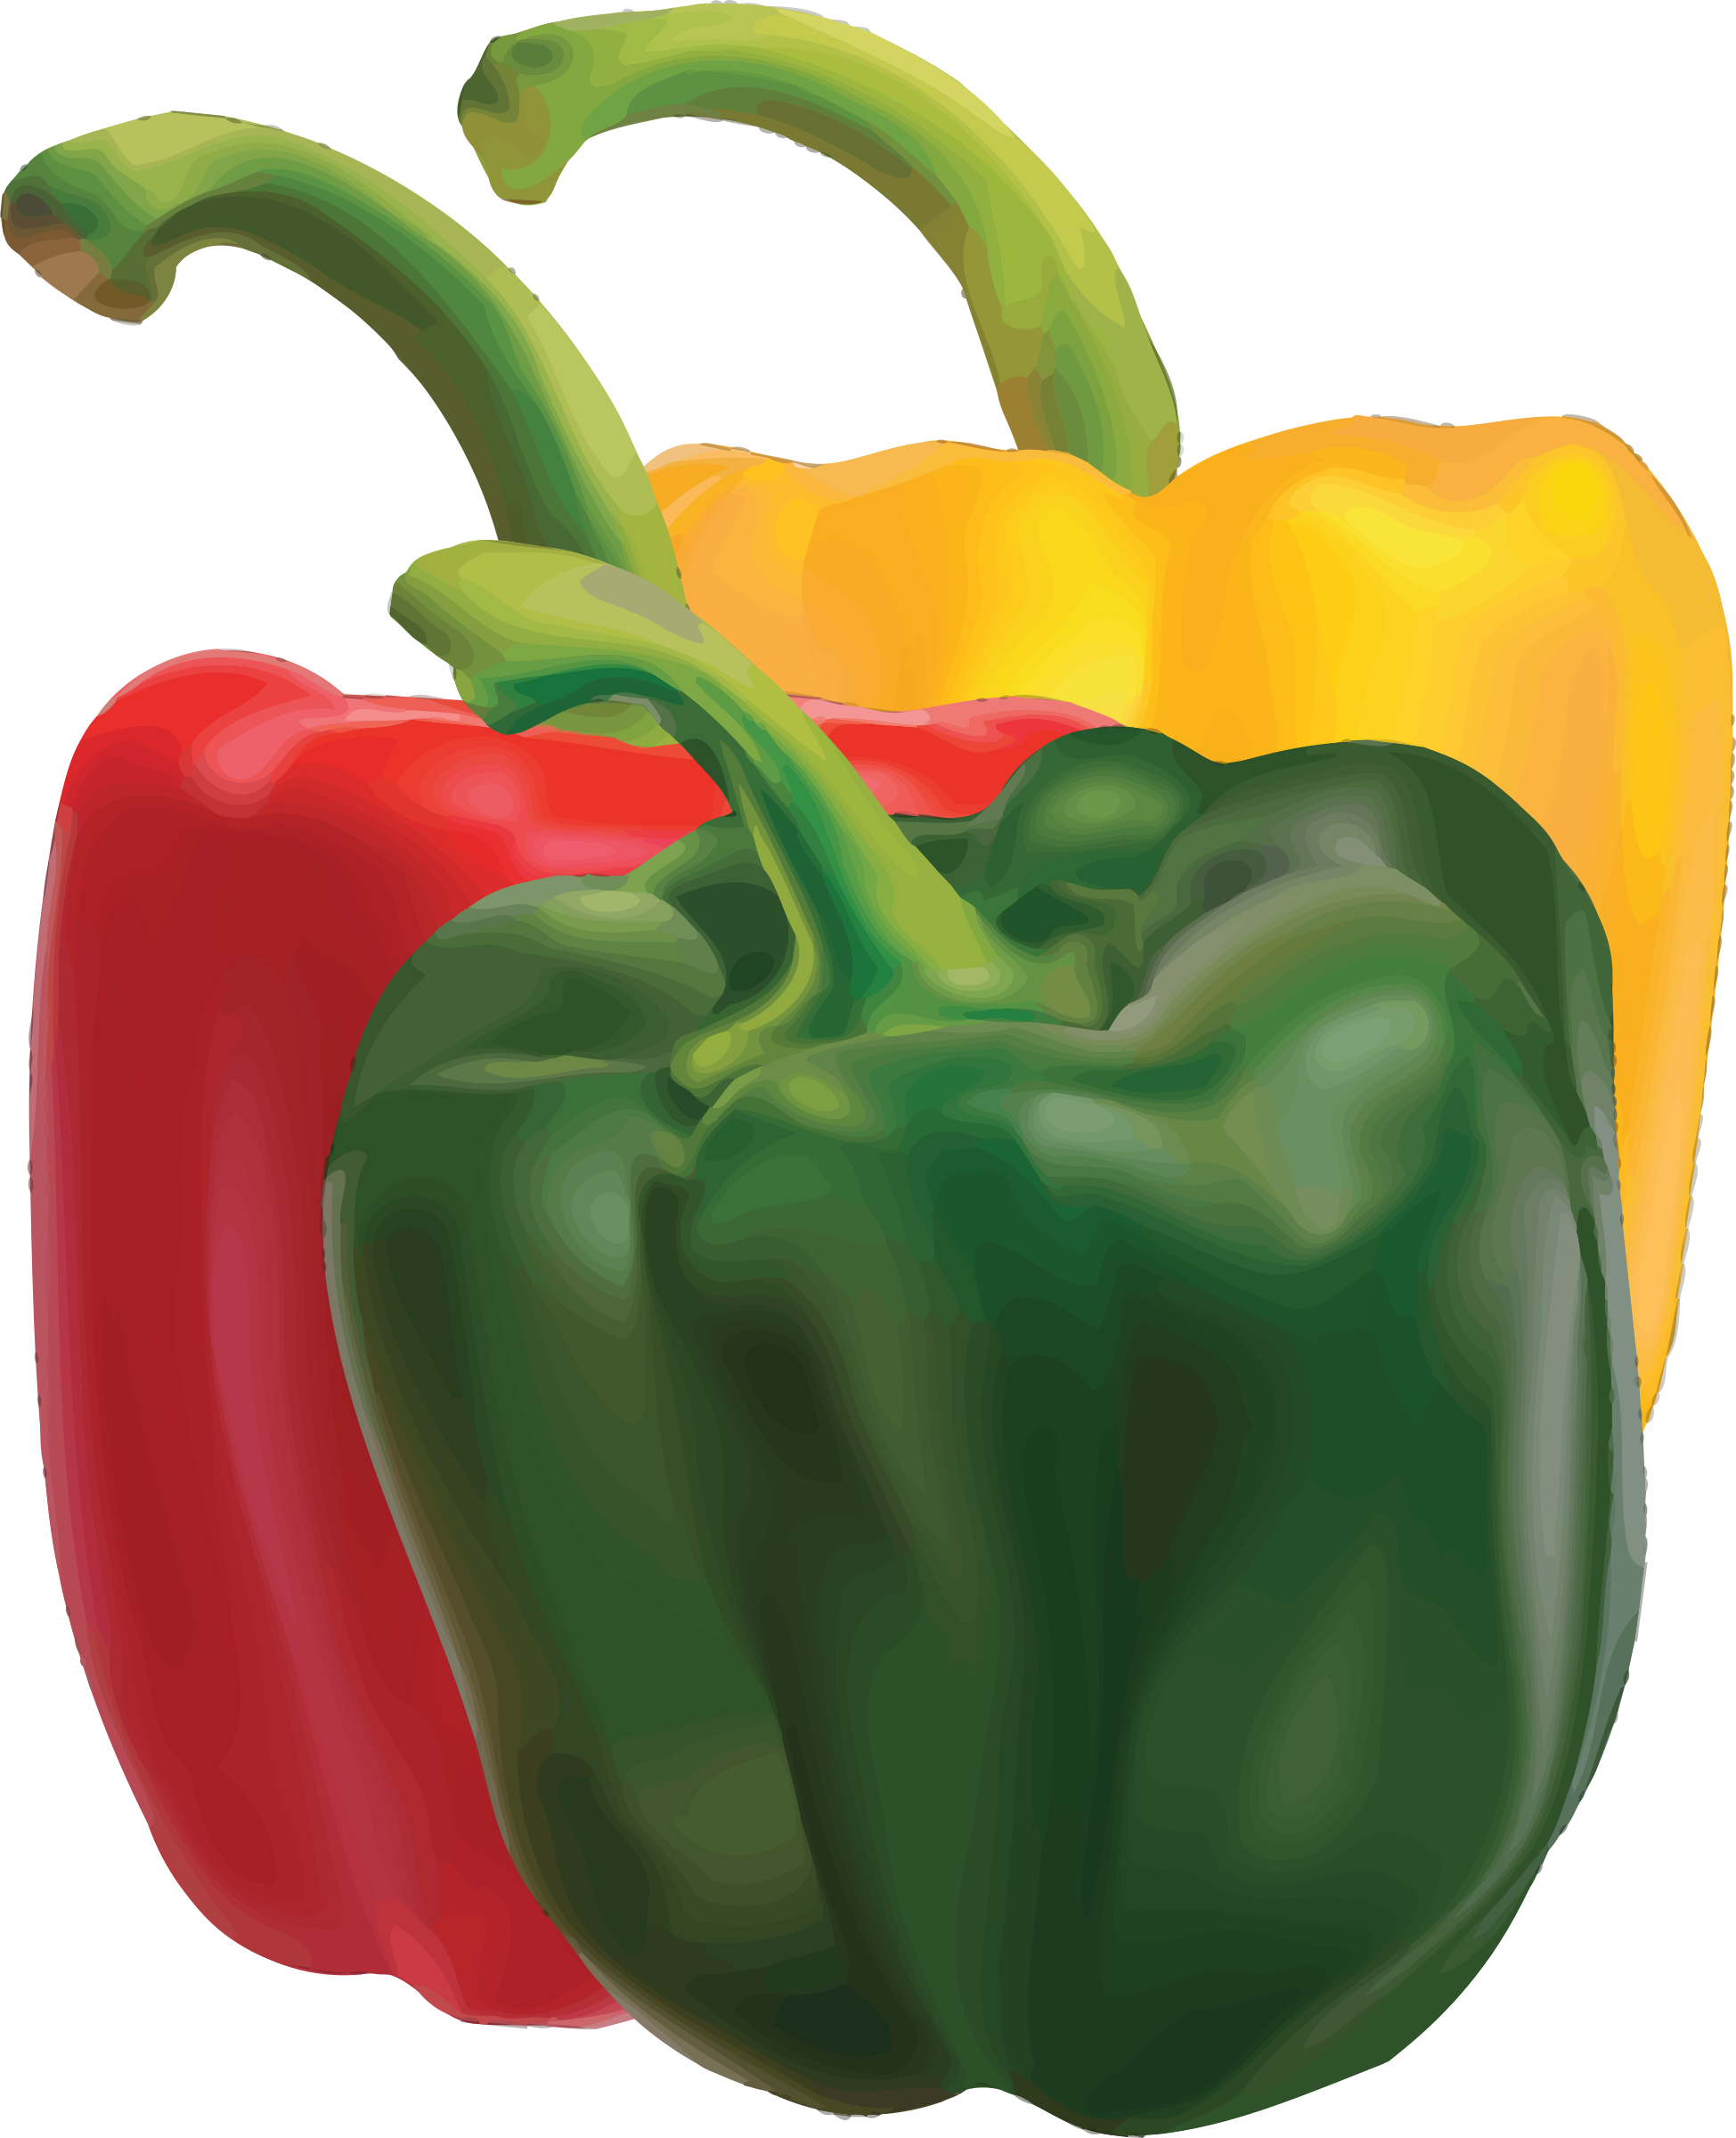 Peppers 2 - Bell Pepper Clipart (1949x2400)